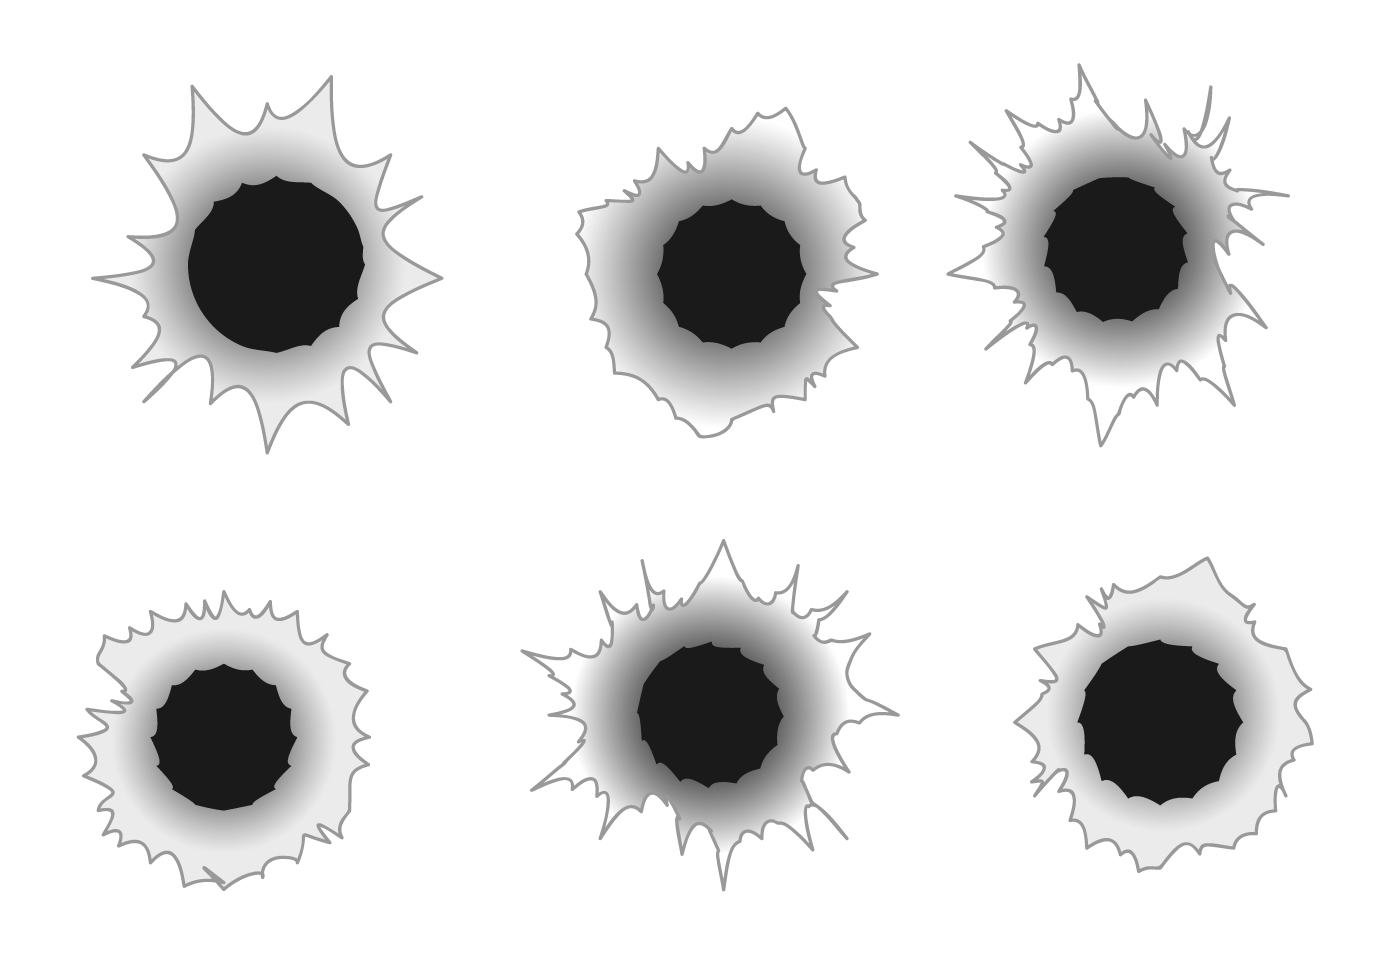 Download Bullet Holes in Paper Vectors - Download Free Vectors ...